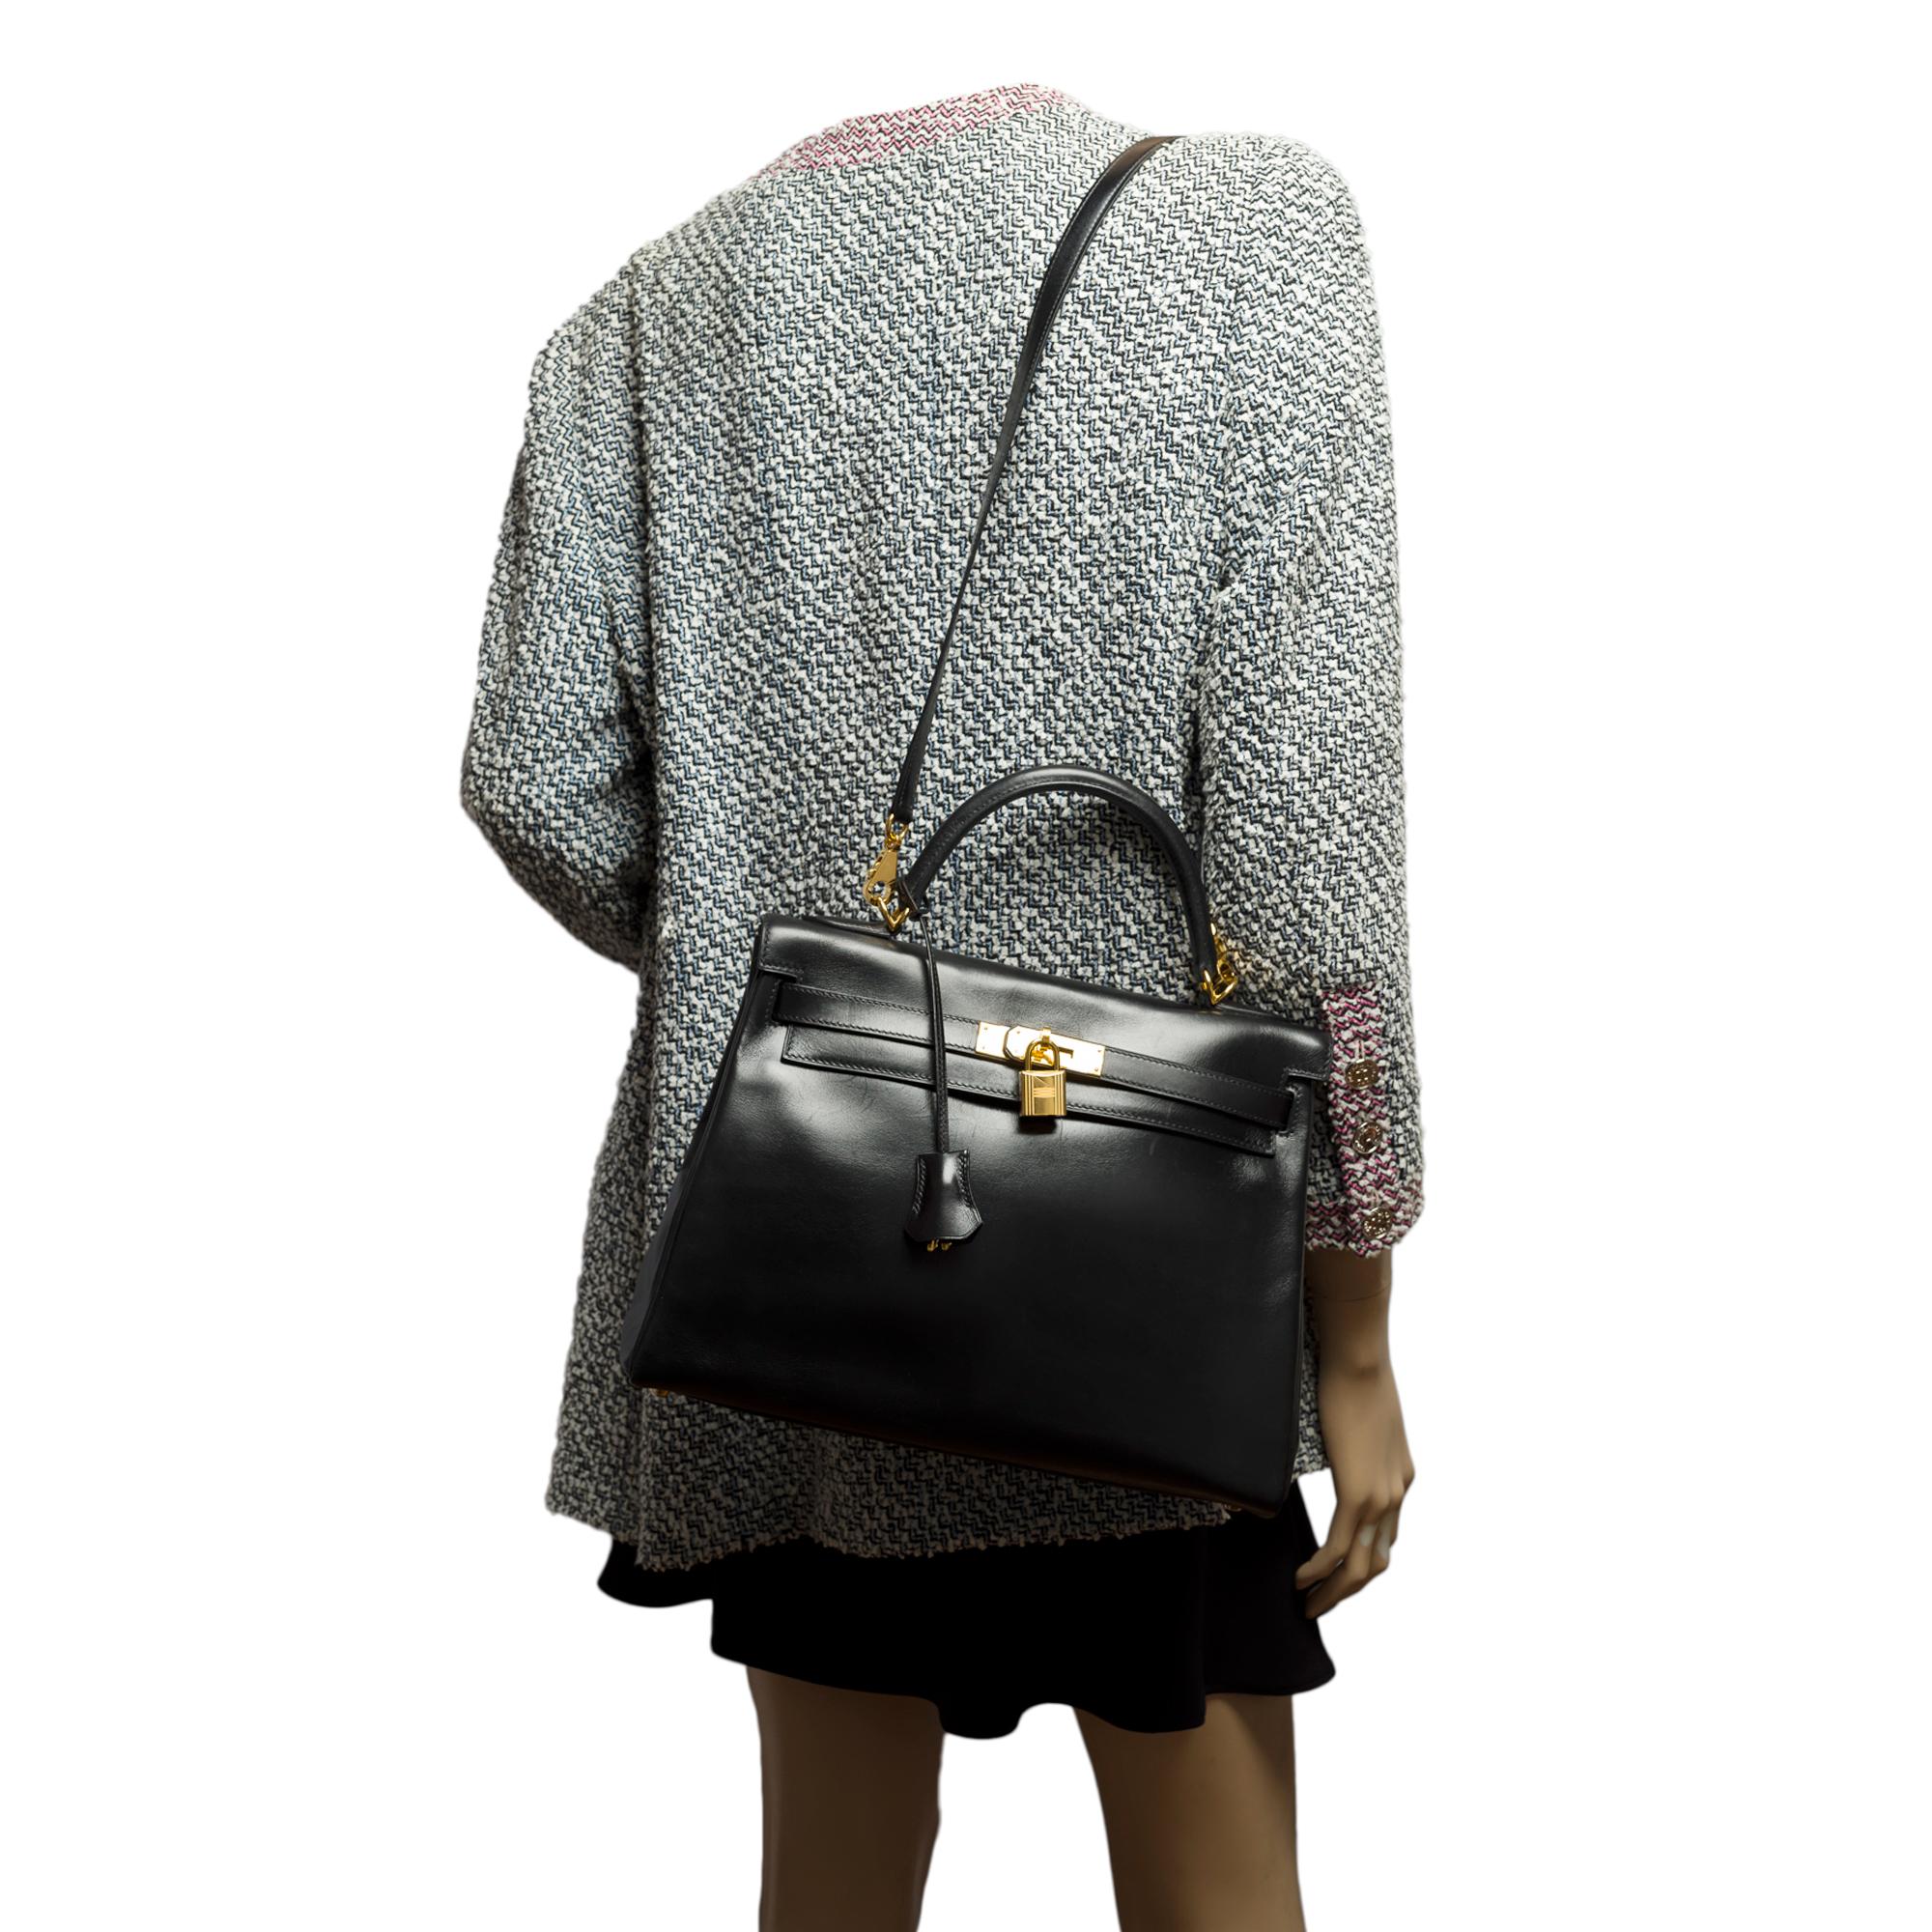 Rare Hermès Kelly 32 retourne handbag strap in black box calfskin leather, GHW 5